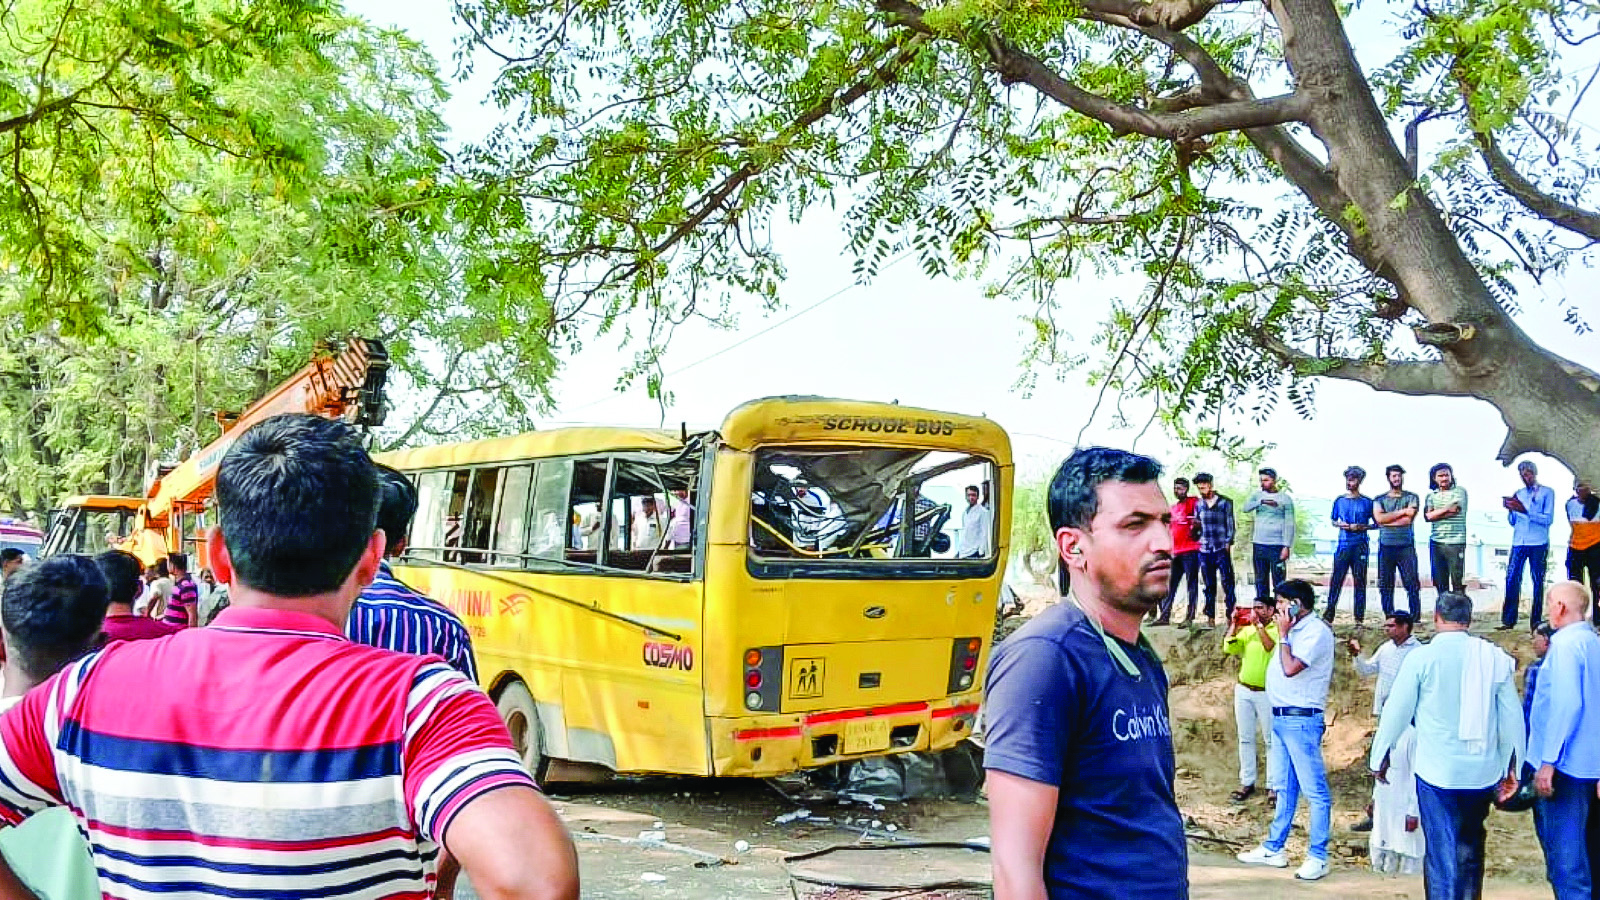 Private School Association blames govt amid school bus tragedy, demands liquor ban